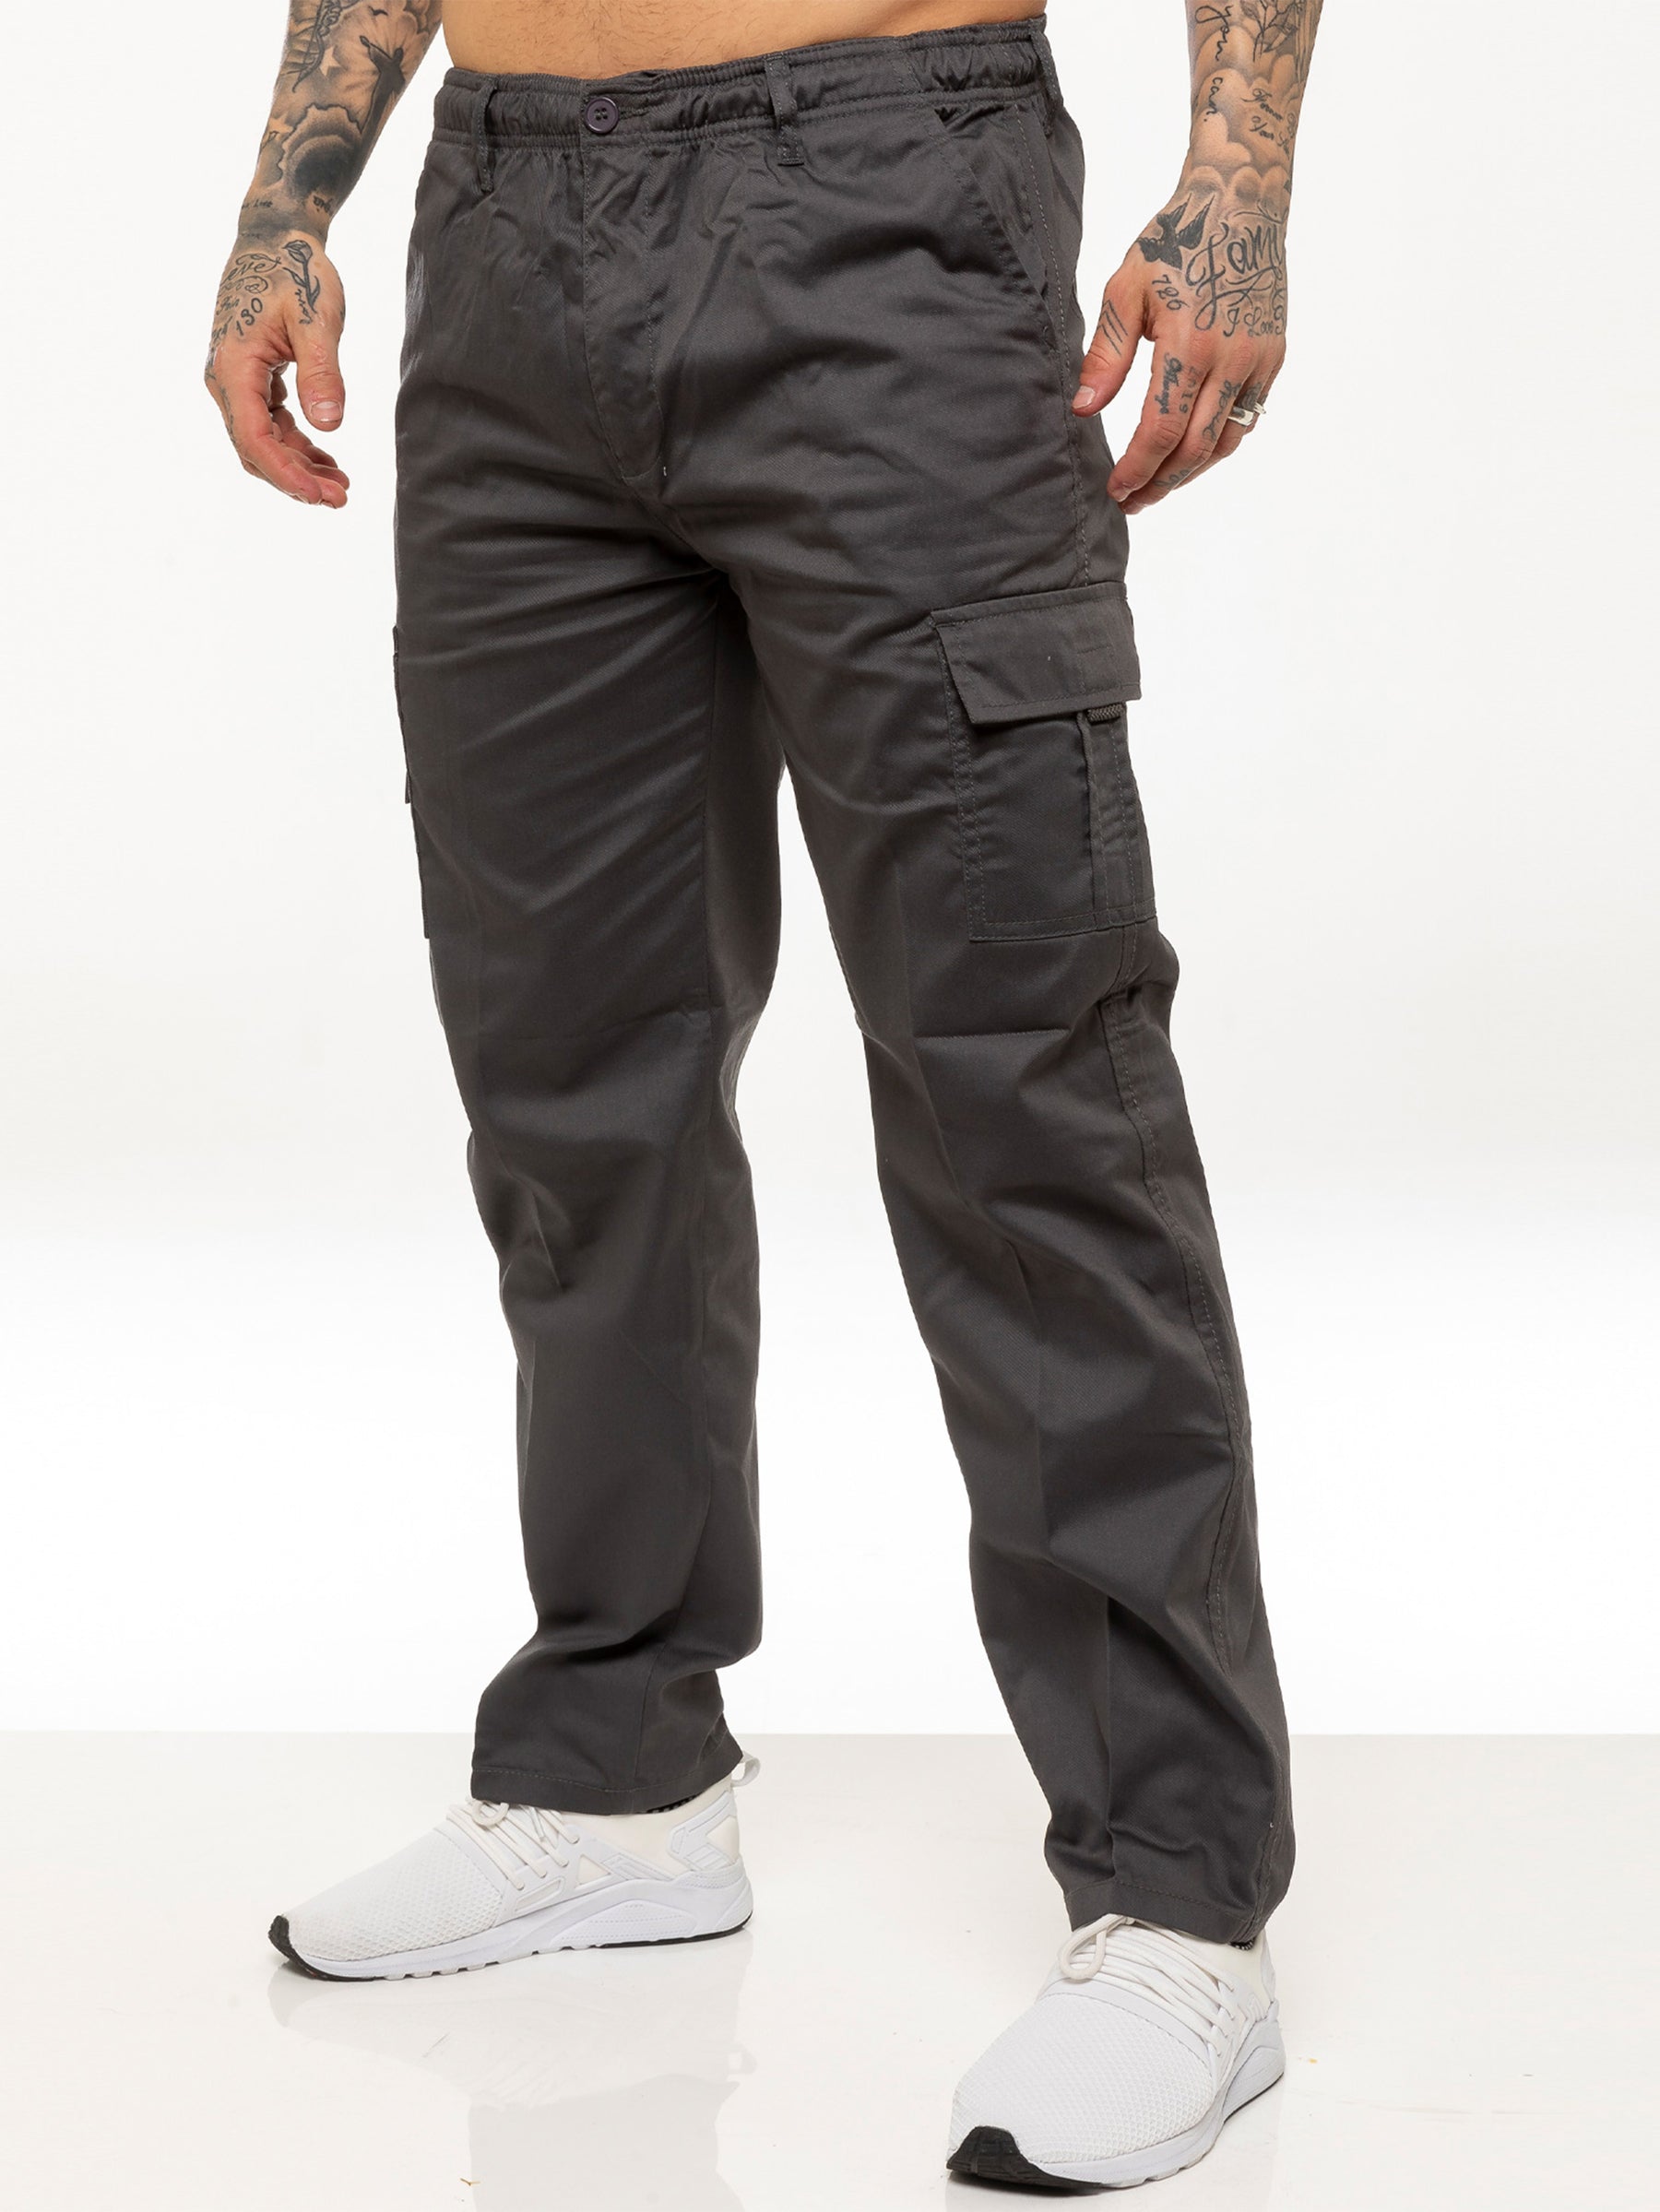 GODLIKEU Mens Cargo Pants With Multi Pockets, Designer Print, Harem Hip Hop  Jogger Cargo Trousers Primark For Casual Sports 220k From Lqbyc, $33.07 |  DHgate.Com